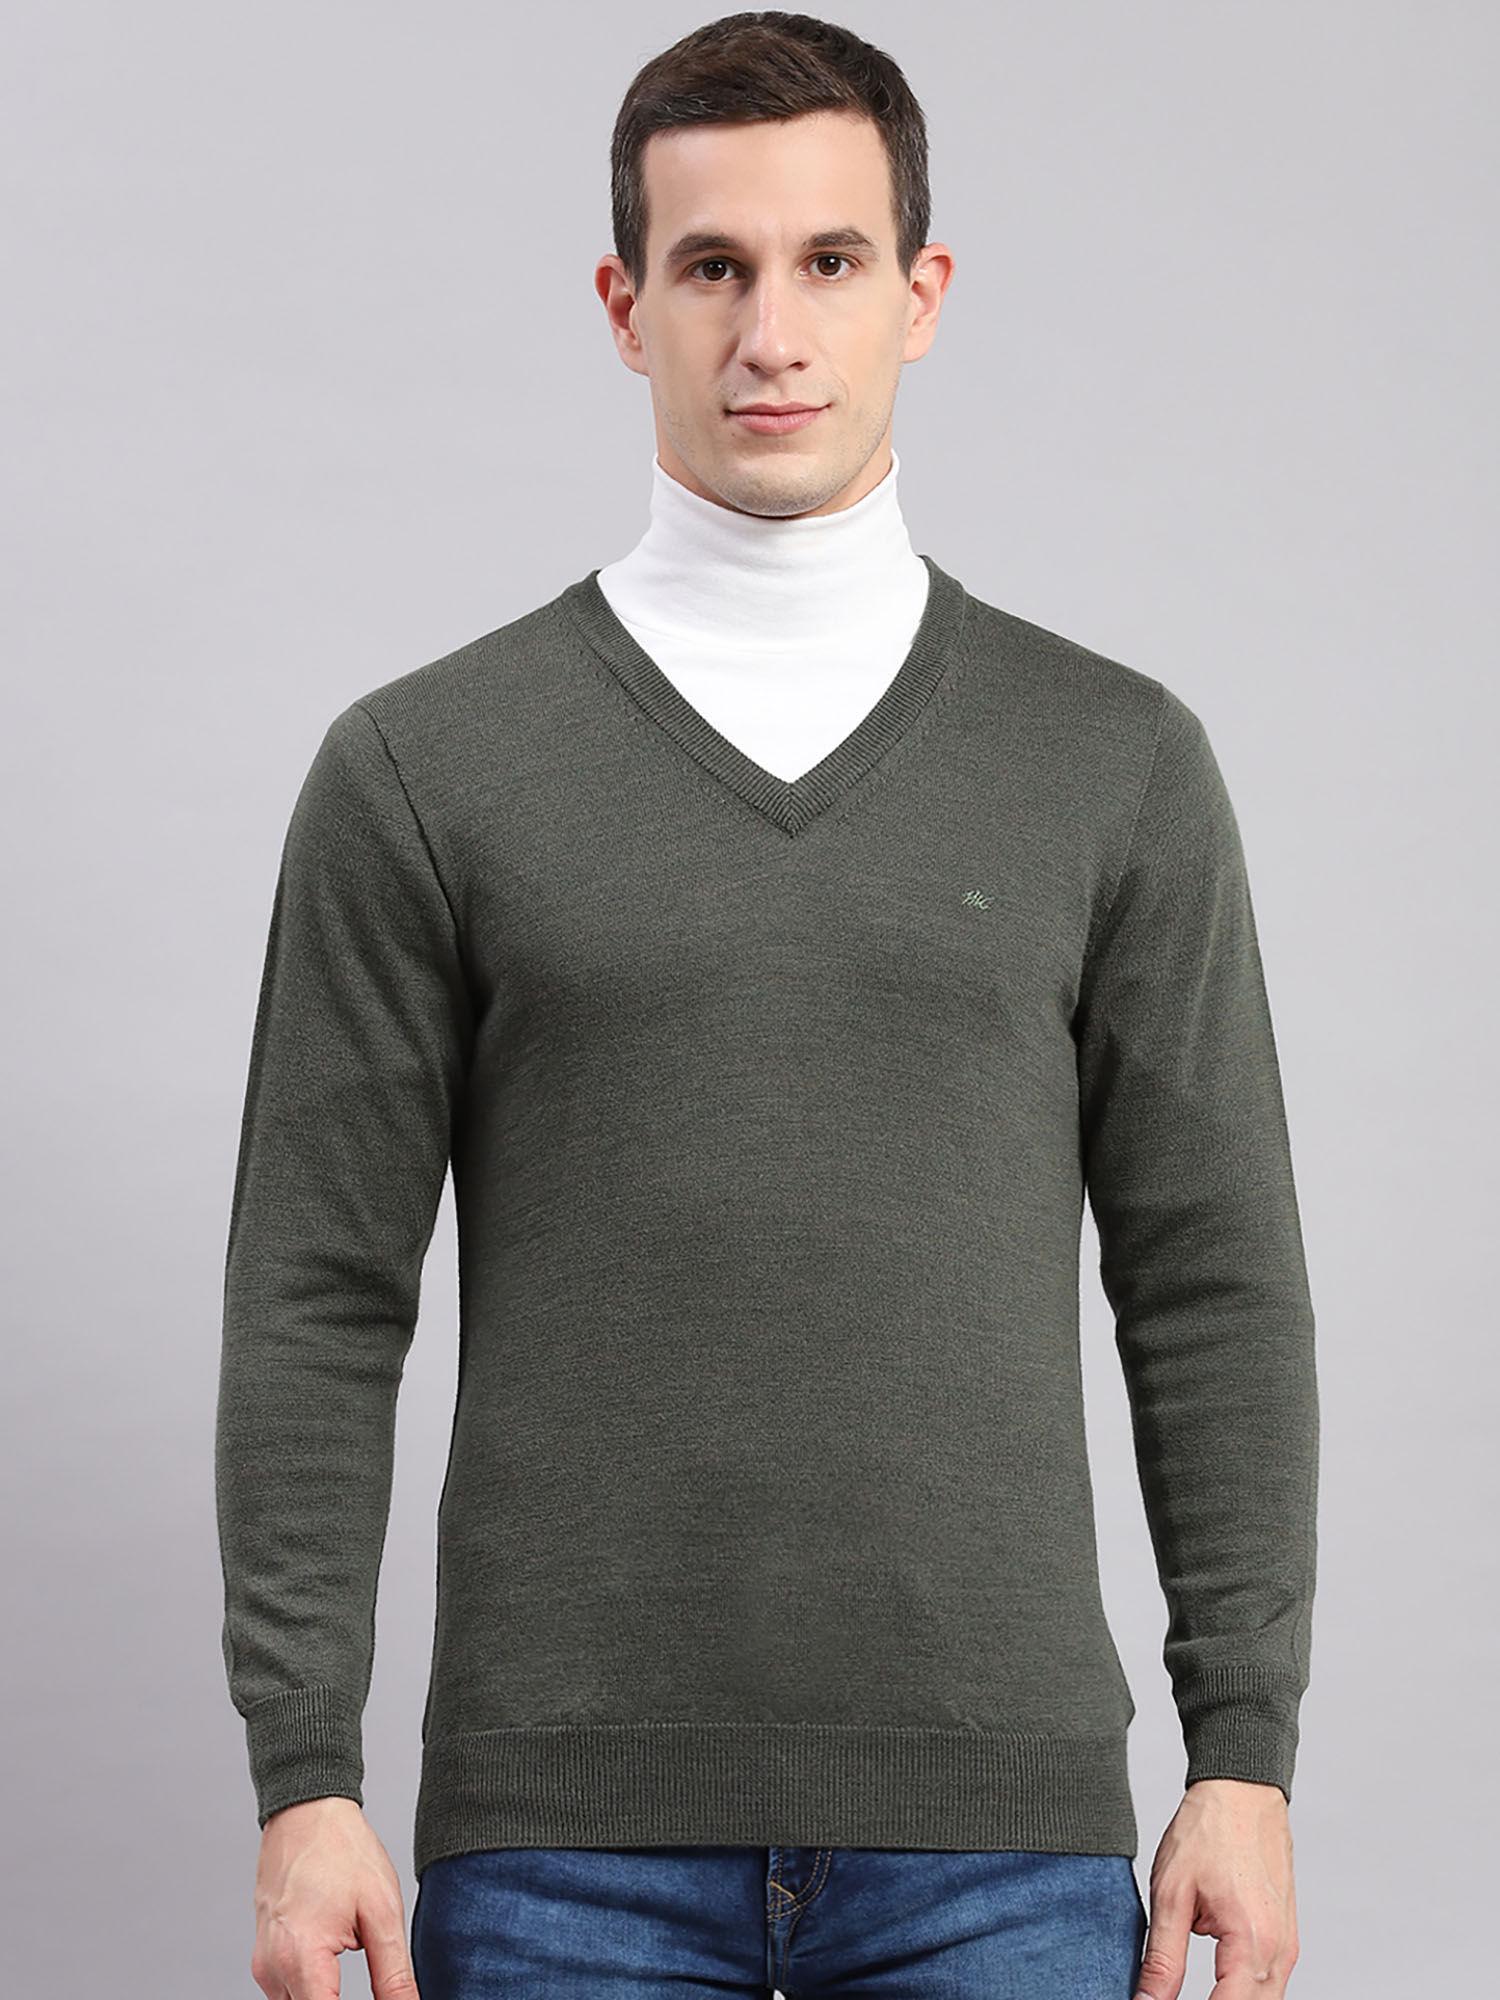 Olive Mix Solid V Neck Sweater